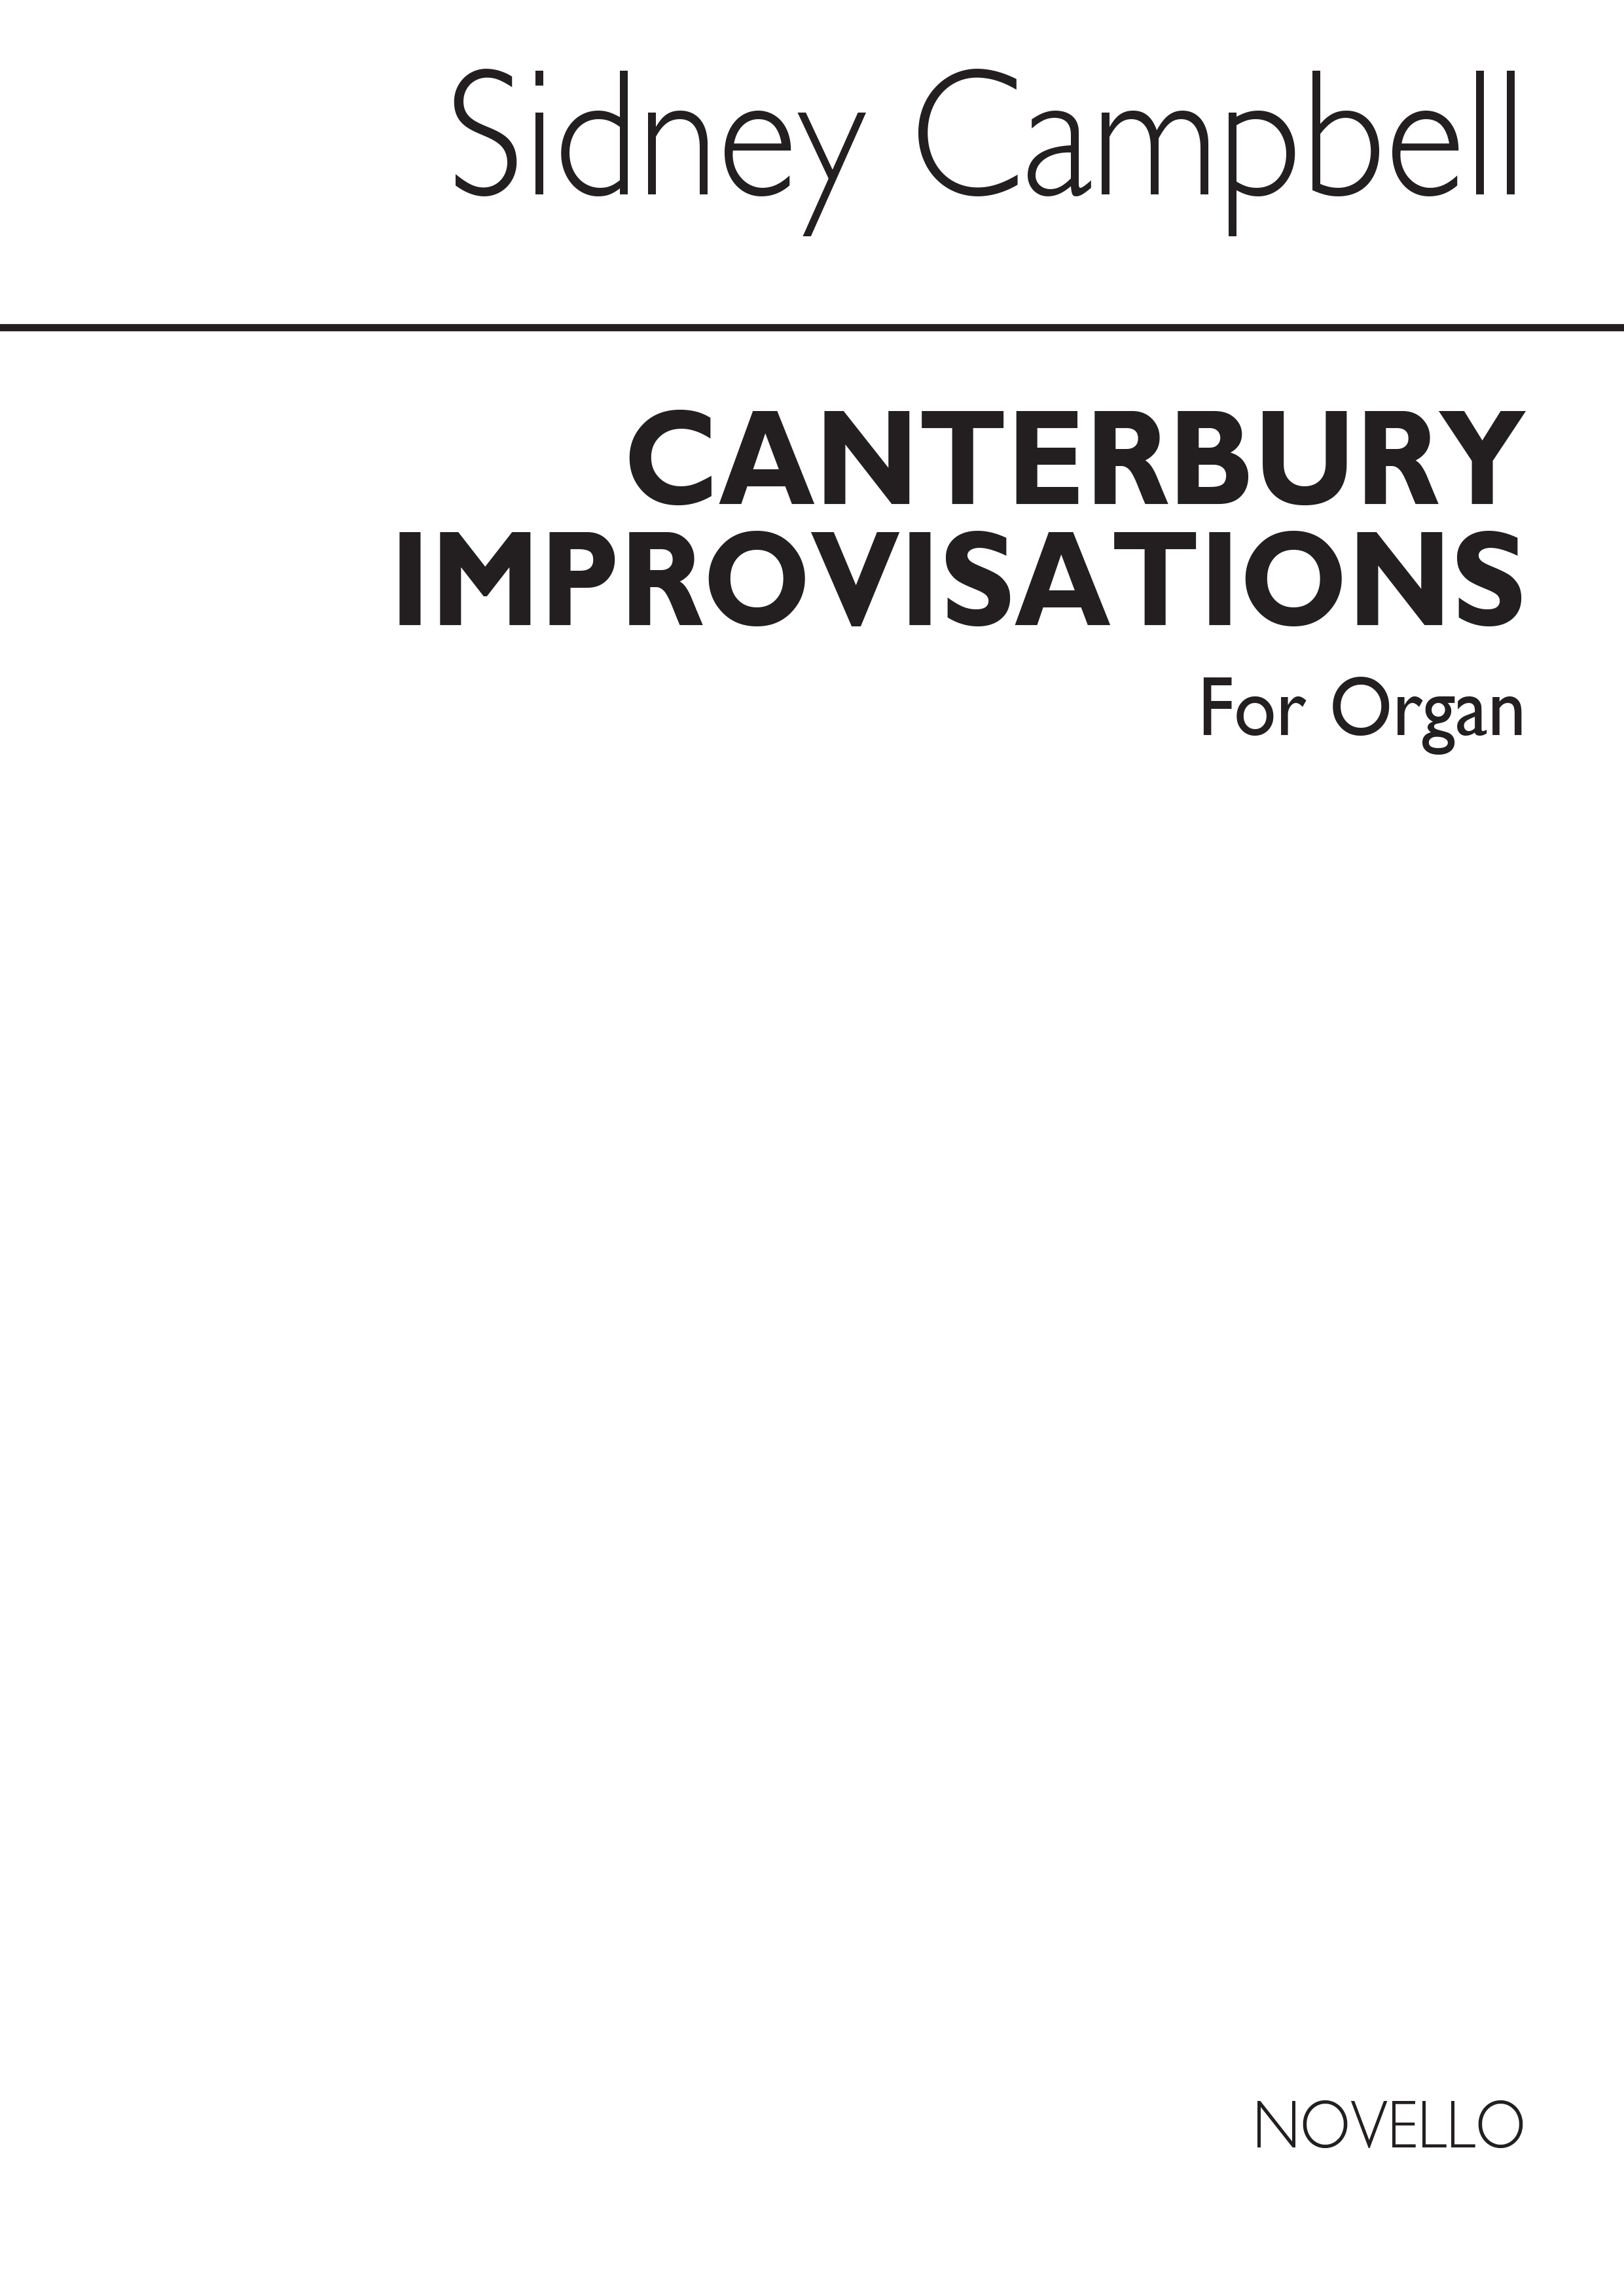 Sidney Campbell: Canterbury Improvisations for Organ